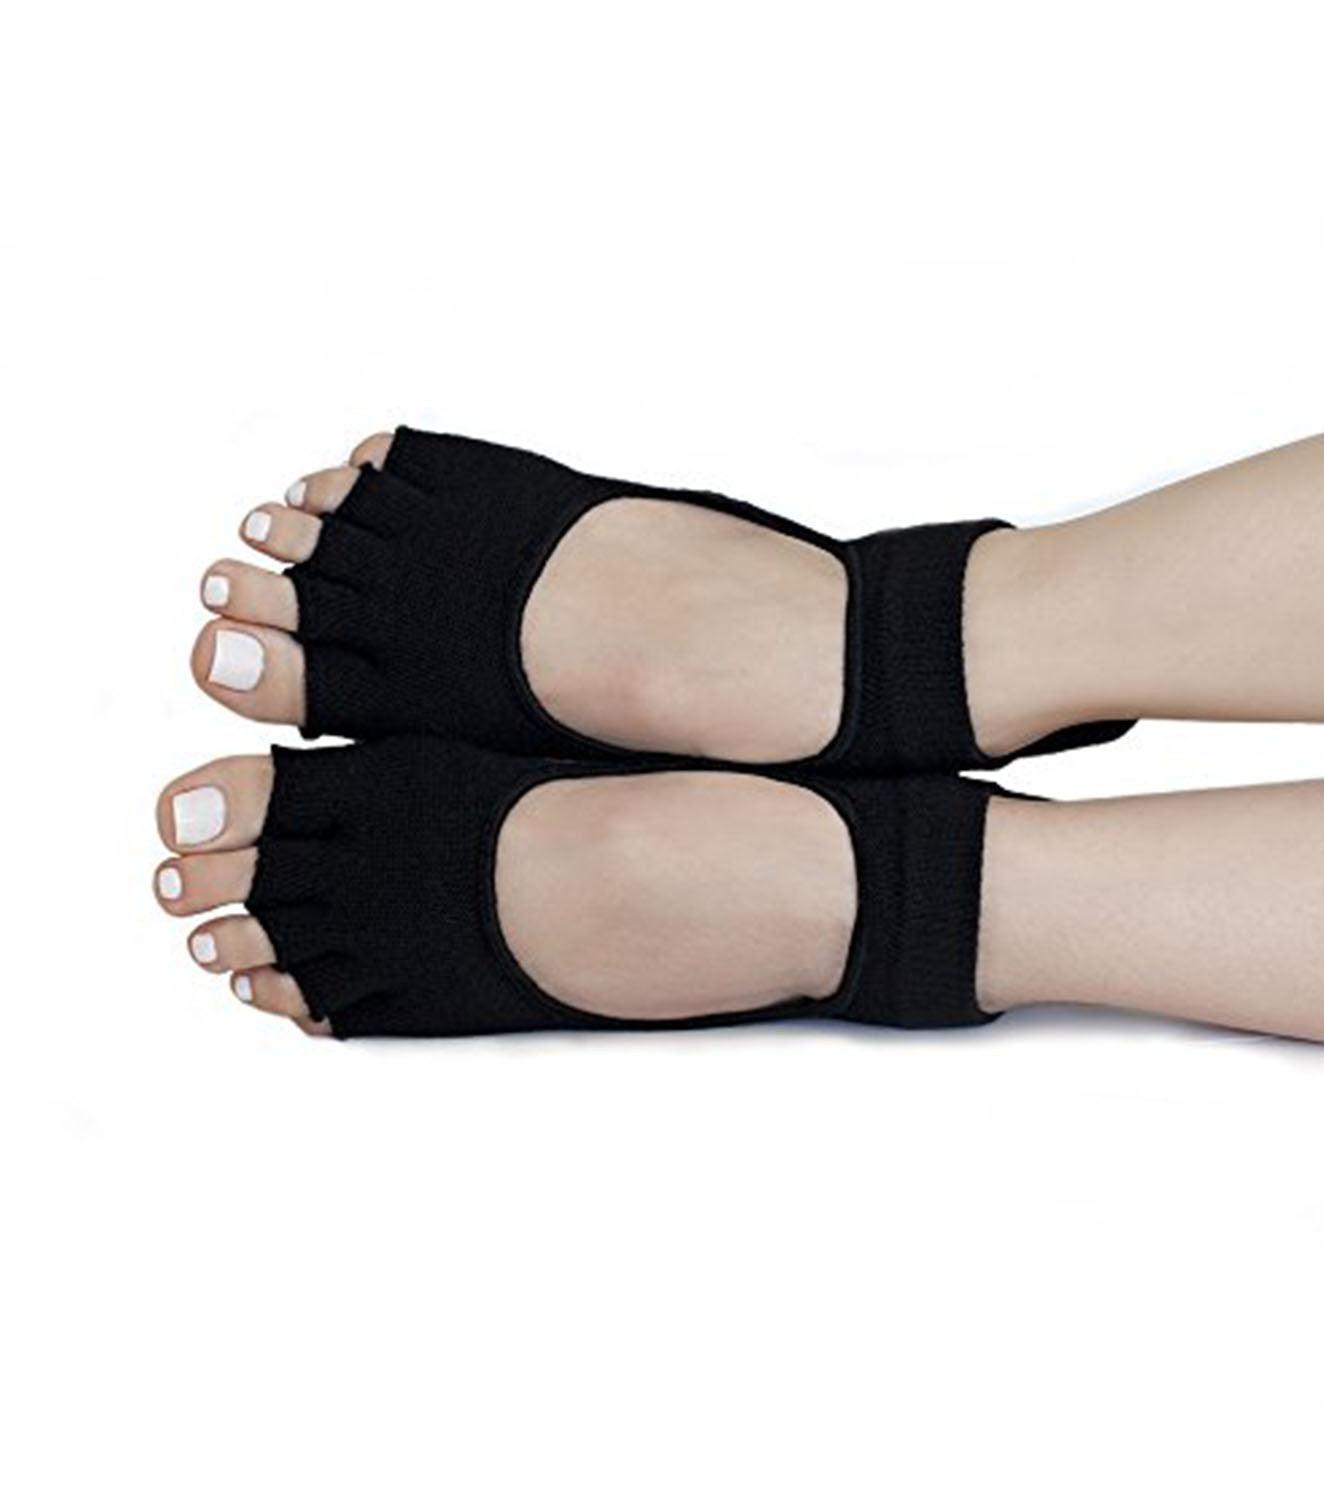 Toeless Yoga Socks - Enhance Your Balance and Stability